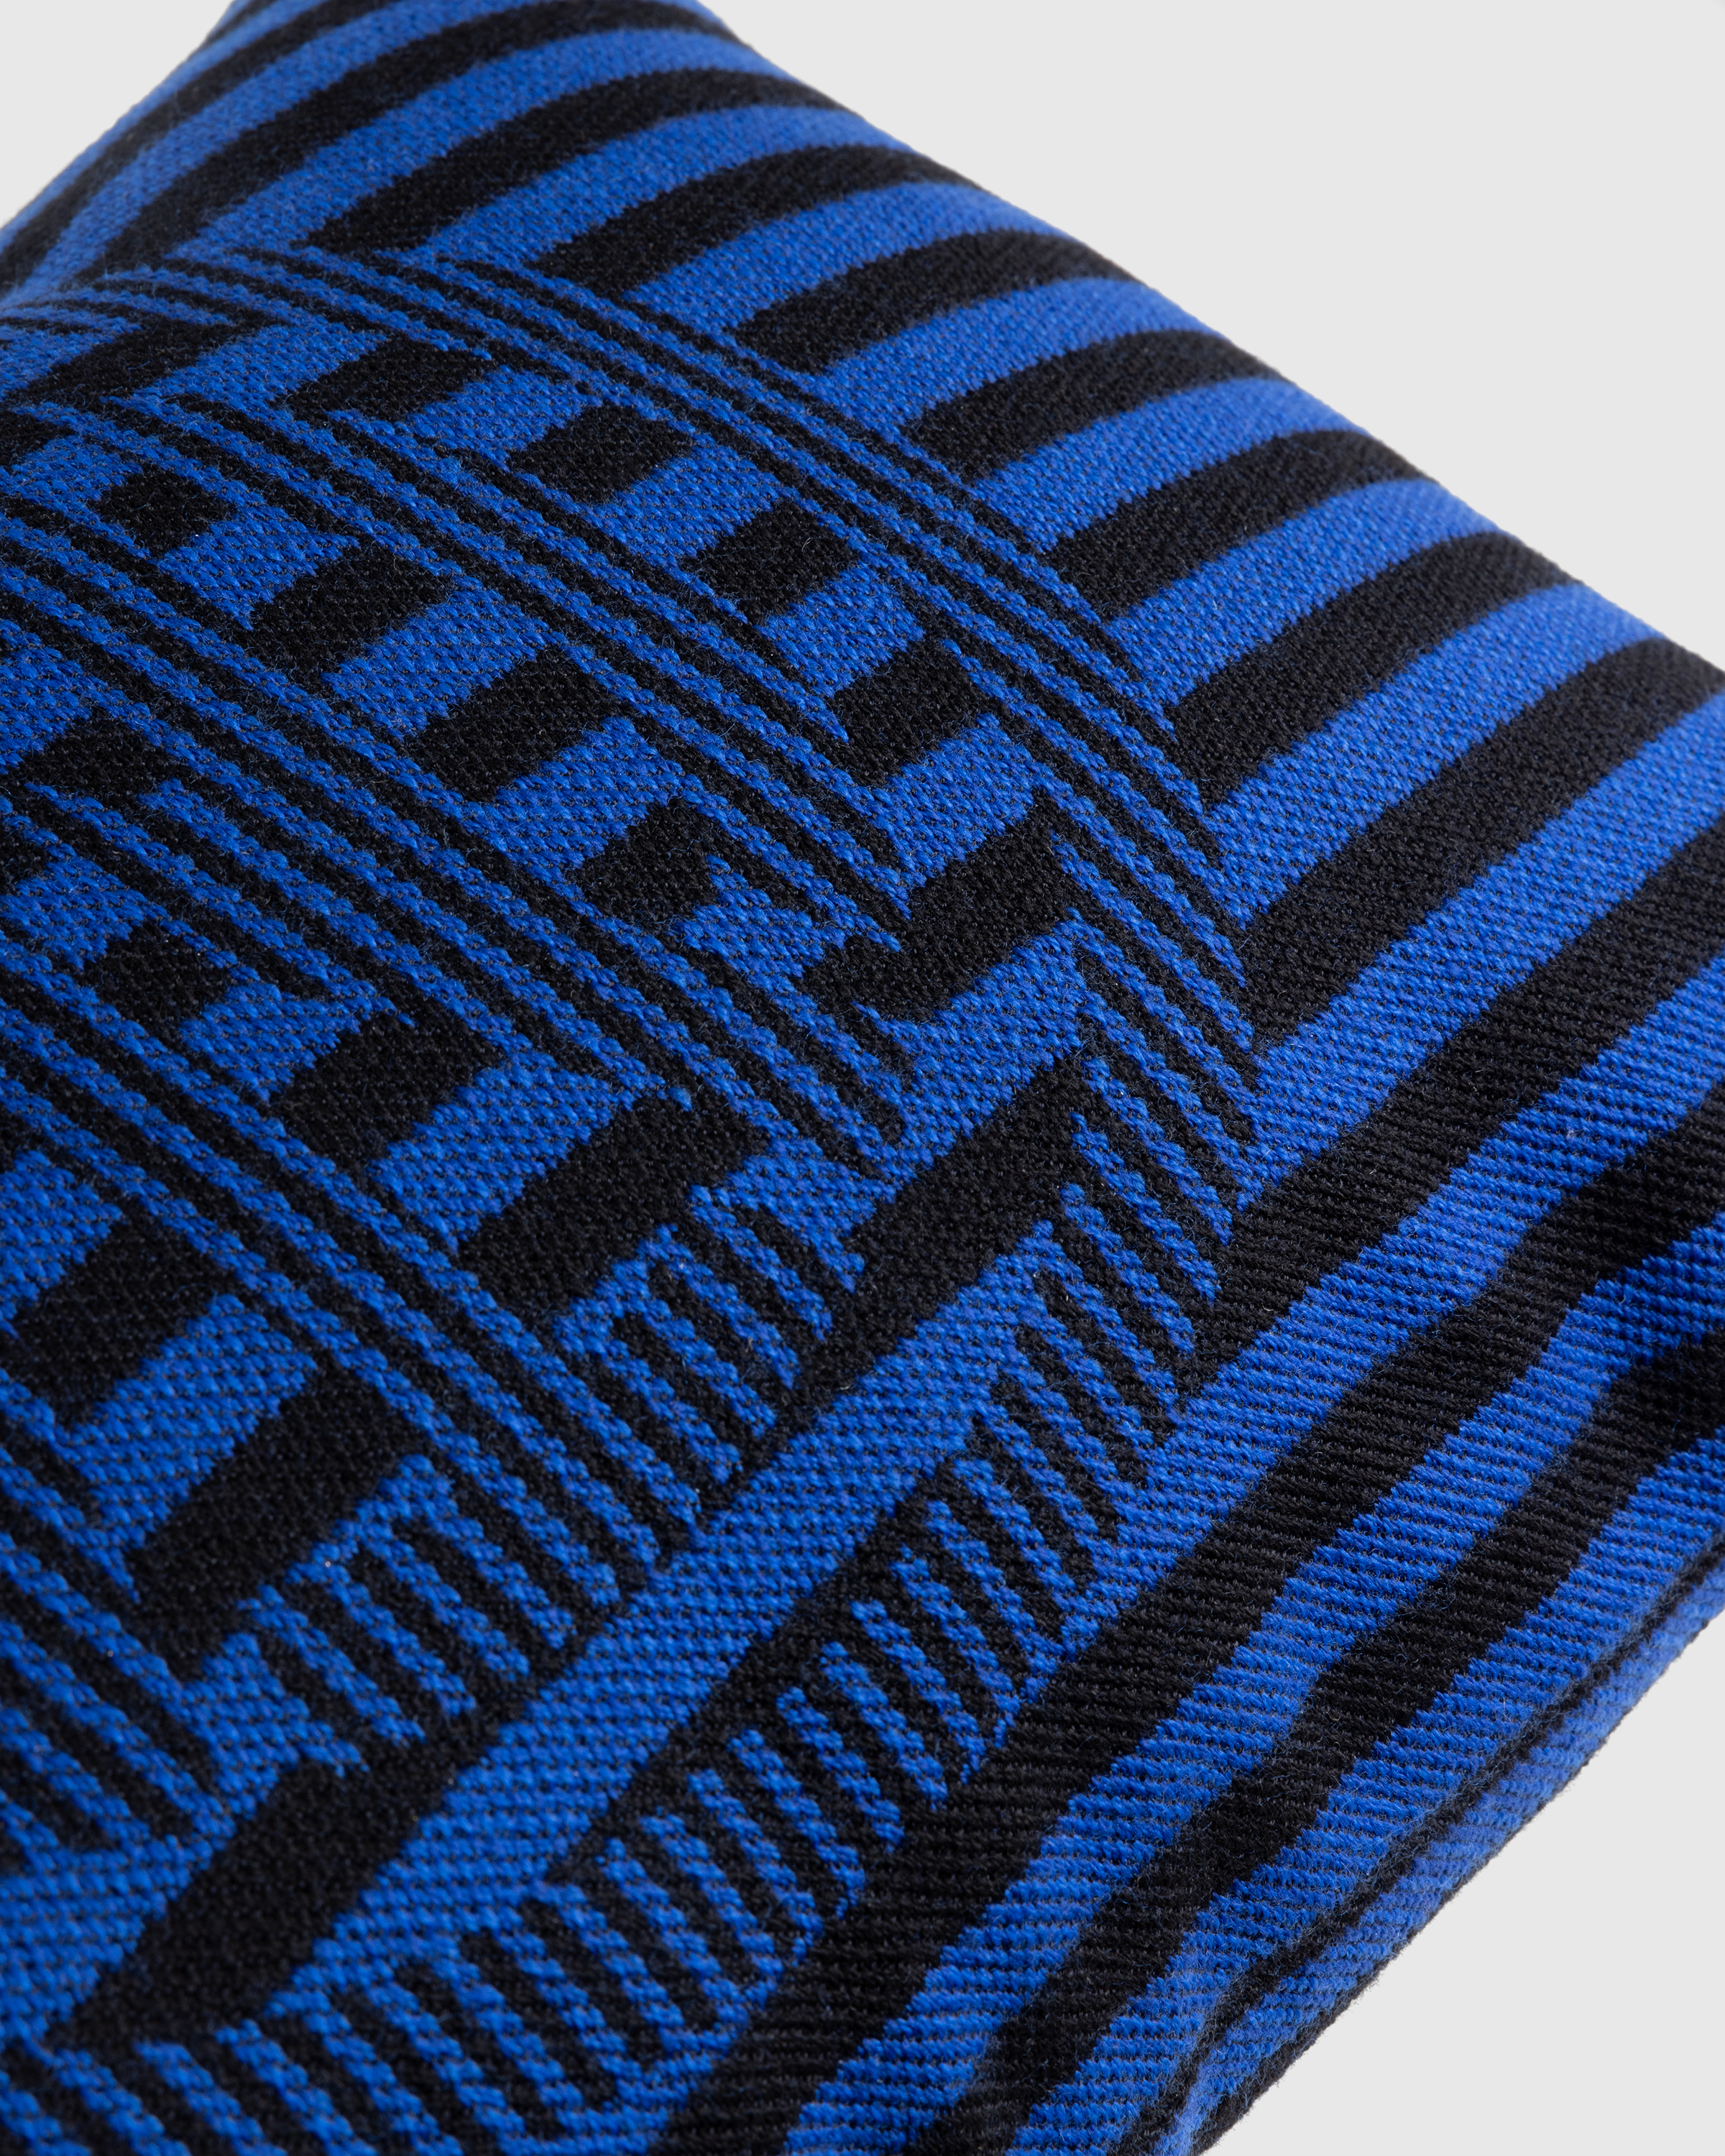 Inter x Highsnobiety – Cushion Black/Blue - Cushions - Black - Image 2